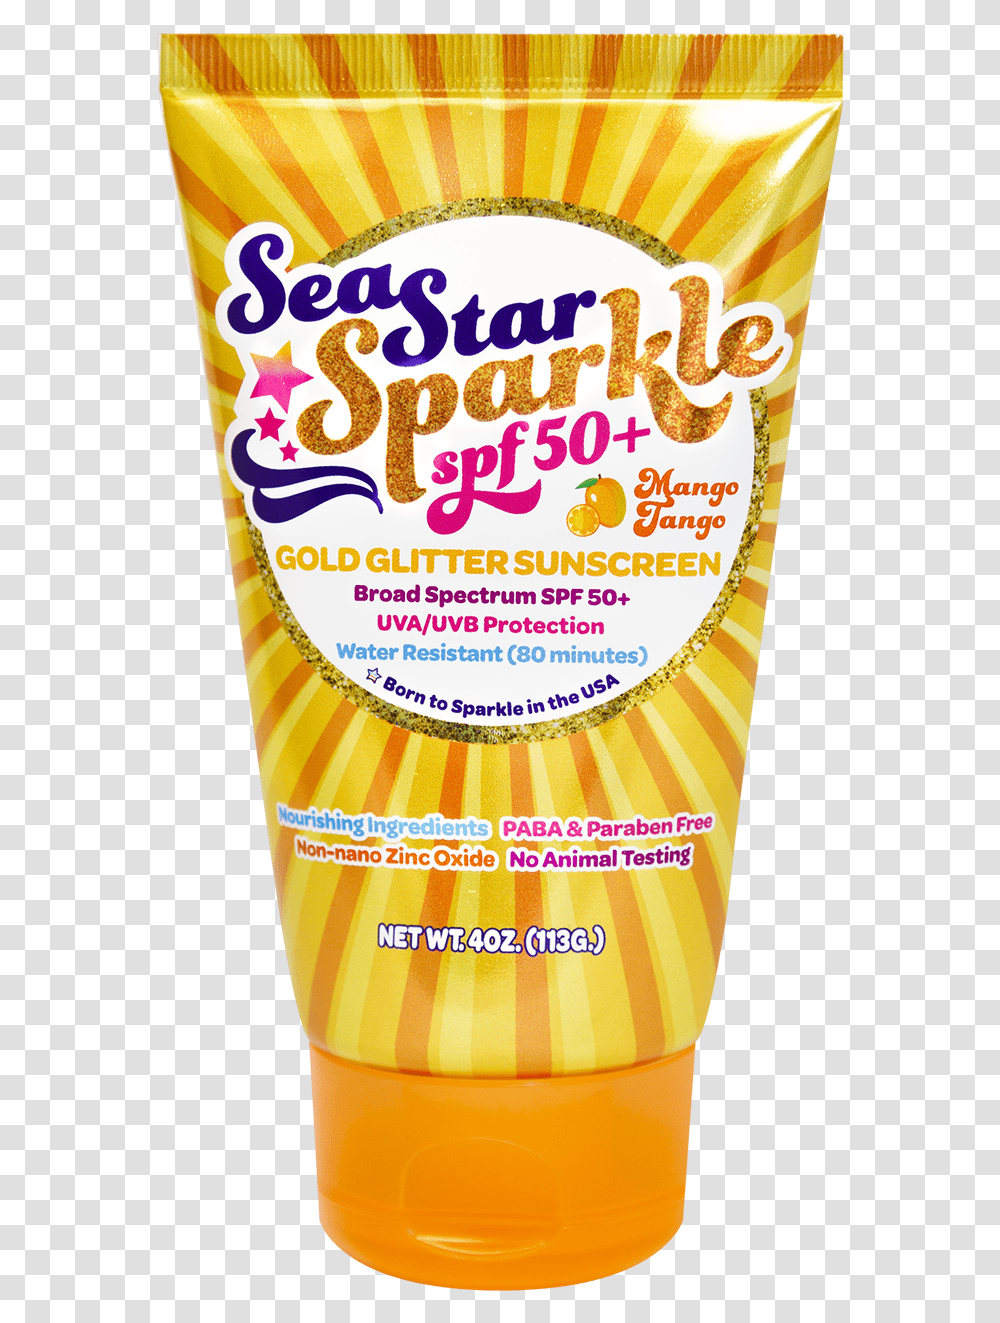 Sparkling Star Sea Star Pop Mango Tango Glitter Sunscreen Sunscreen, Bottle, Beer, Alcohol, Beverage Transparent Png